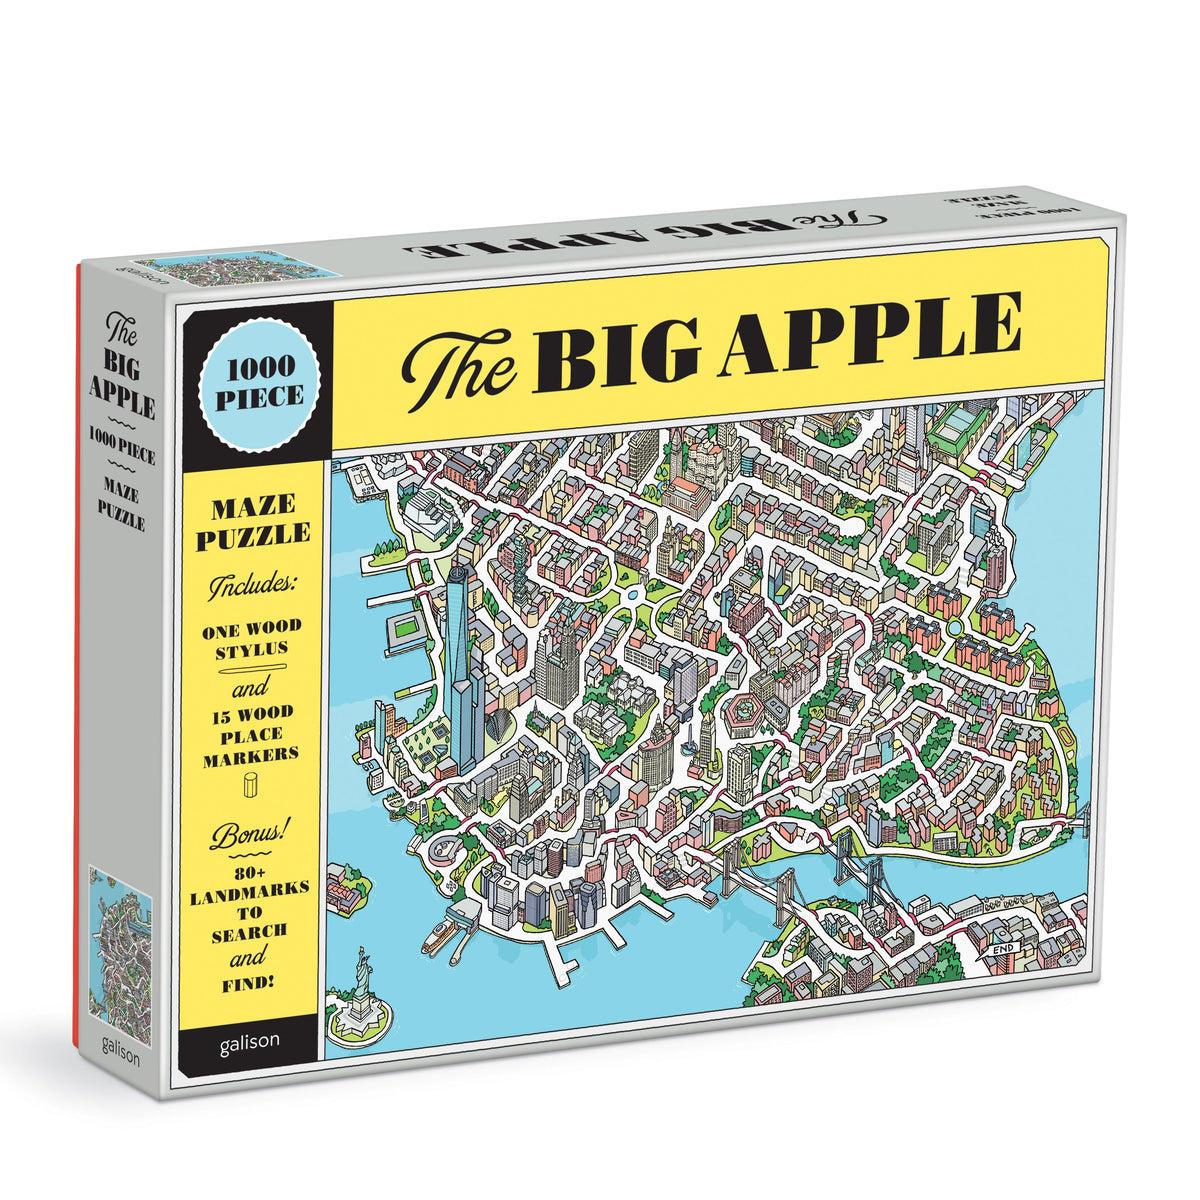 The Big Apple 1000 Piece Maze Puzzle Galison 